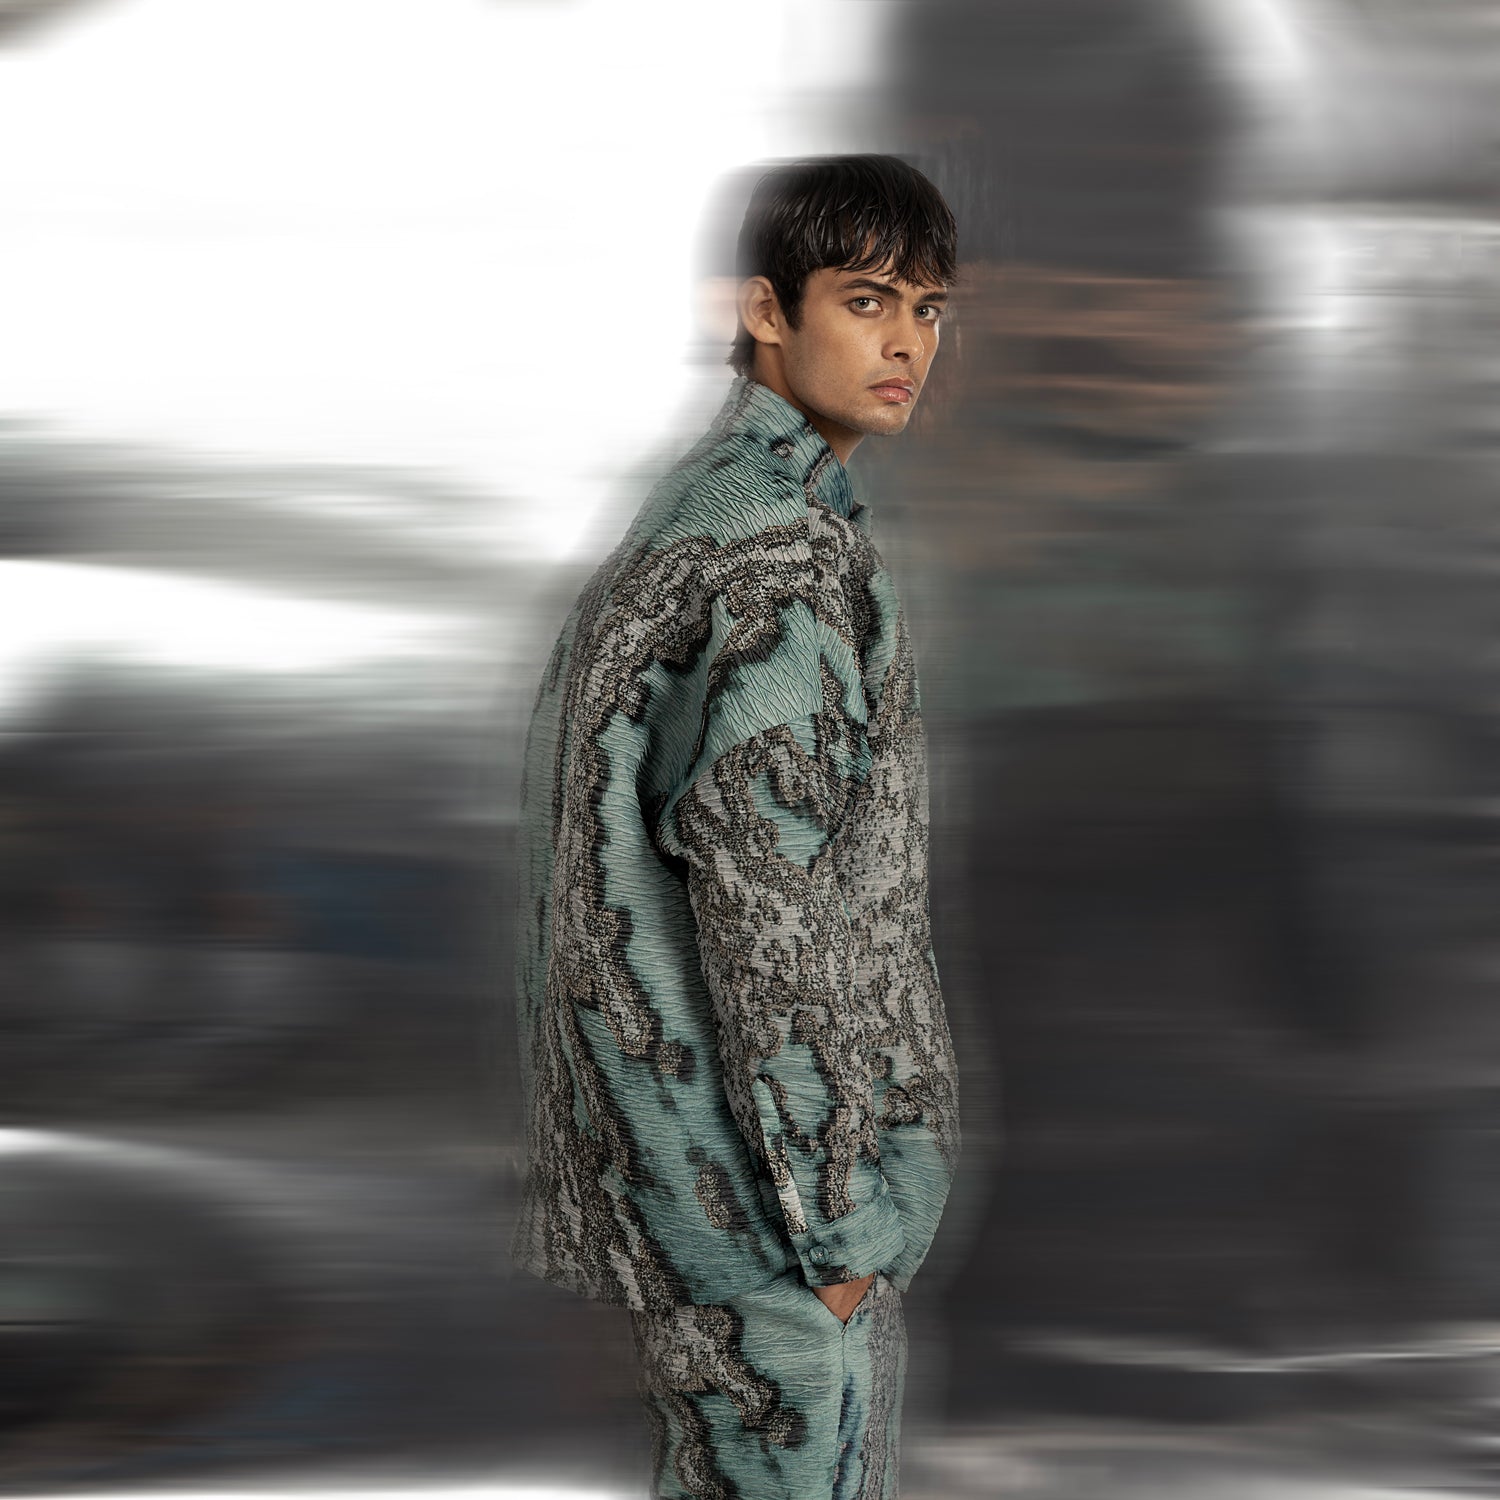 Coast print texture anti-fit drop-down shoulder jacket featuring gusset detail on sleeve. #abhisheksharma #fashiondesignerabhisheksharma #reef #redcarpet #shortdress #abhishekstudio #lfw #fdci